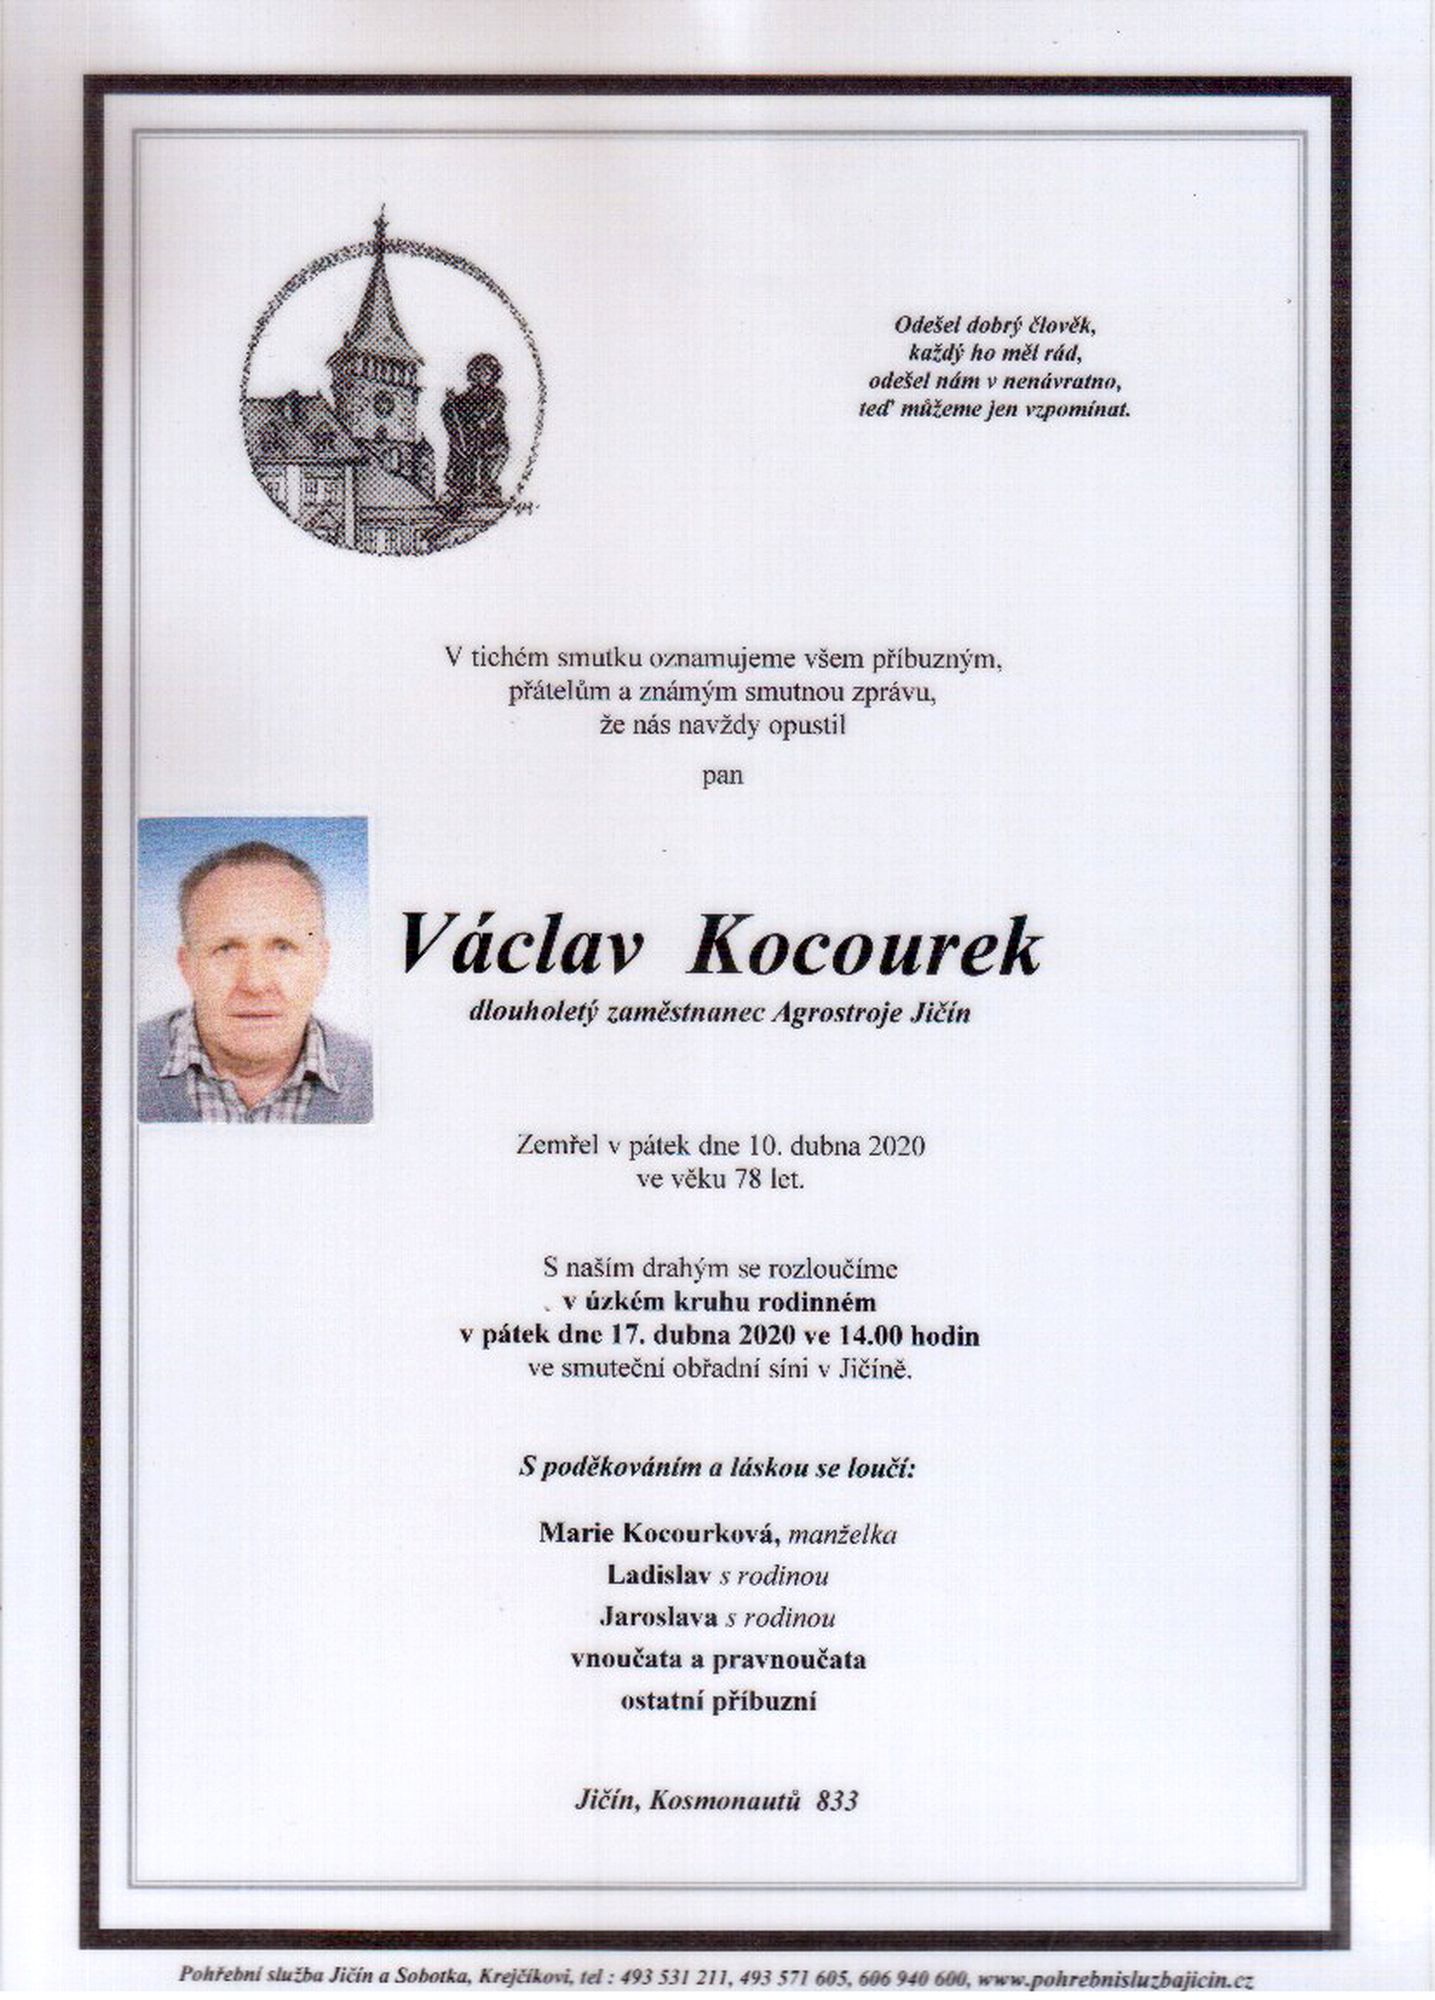 Václav Kocourek